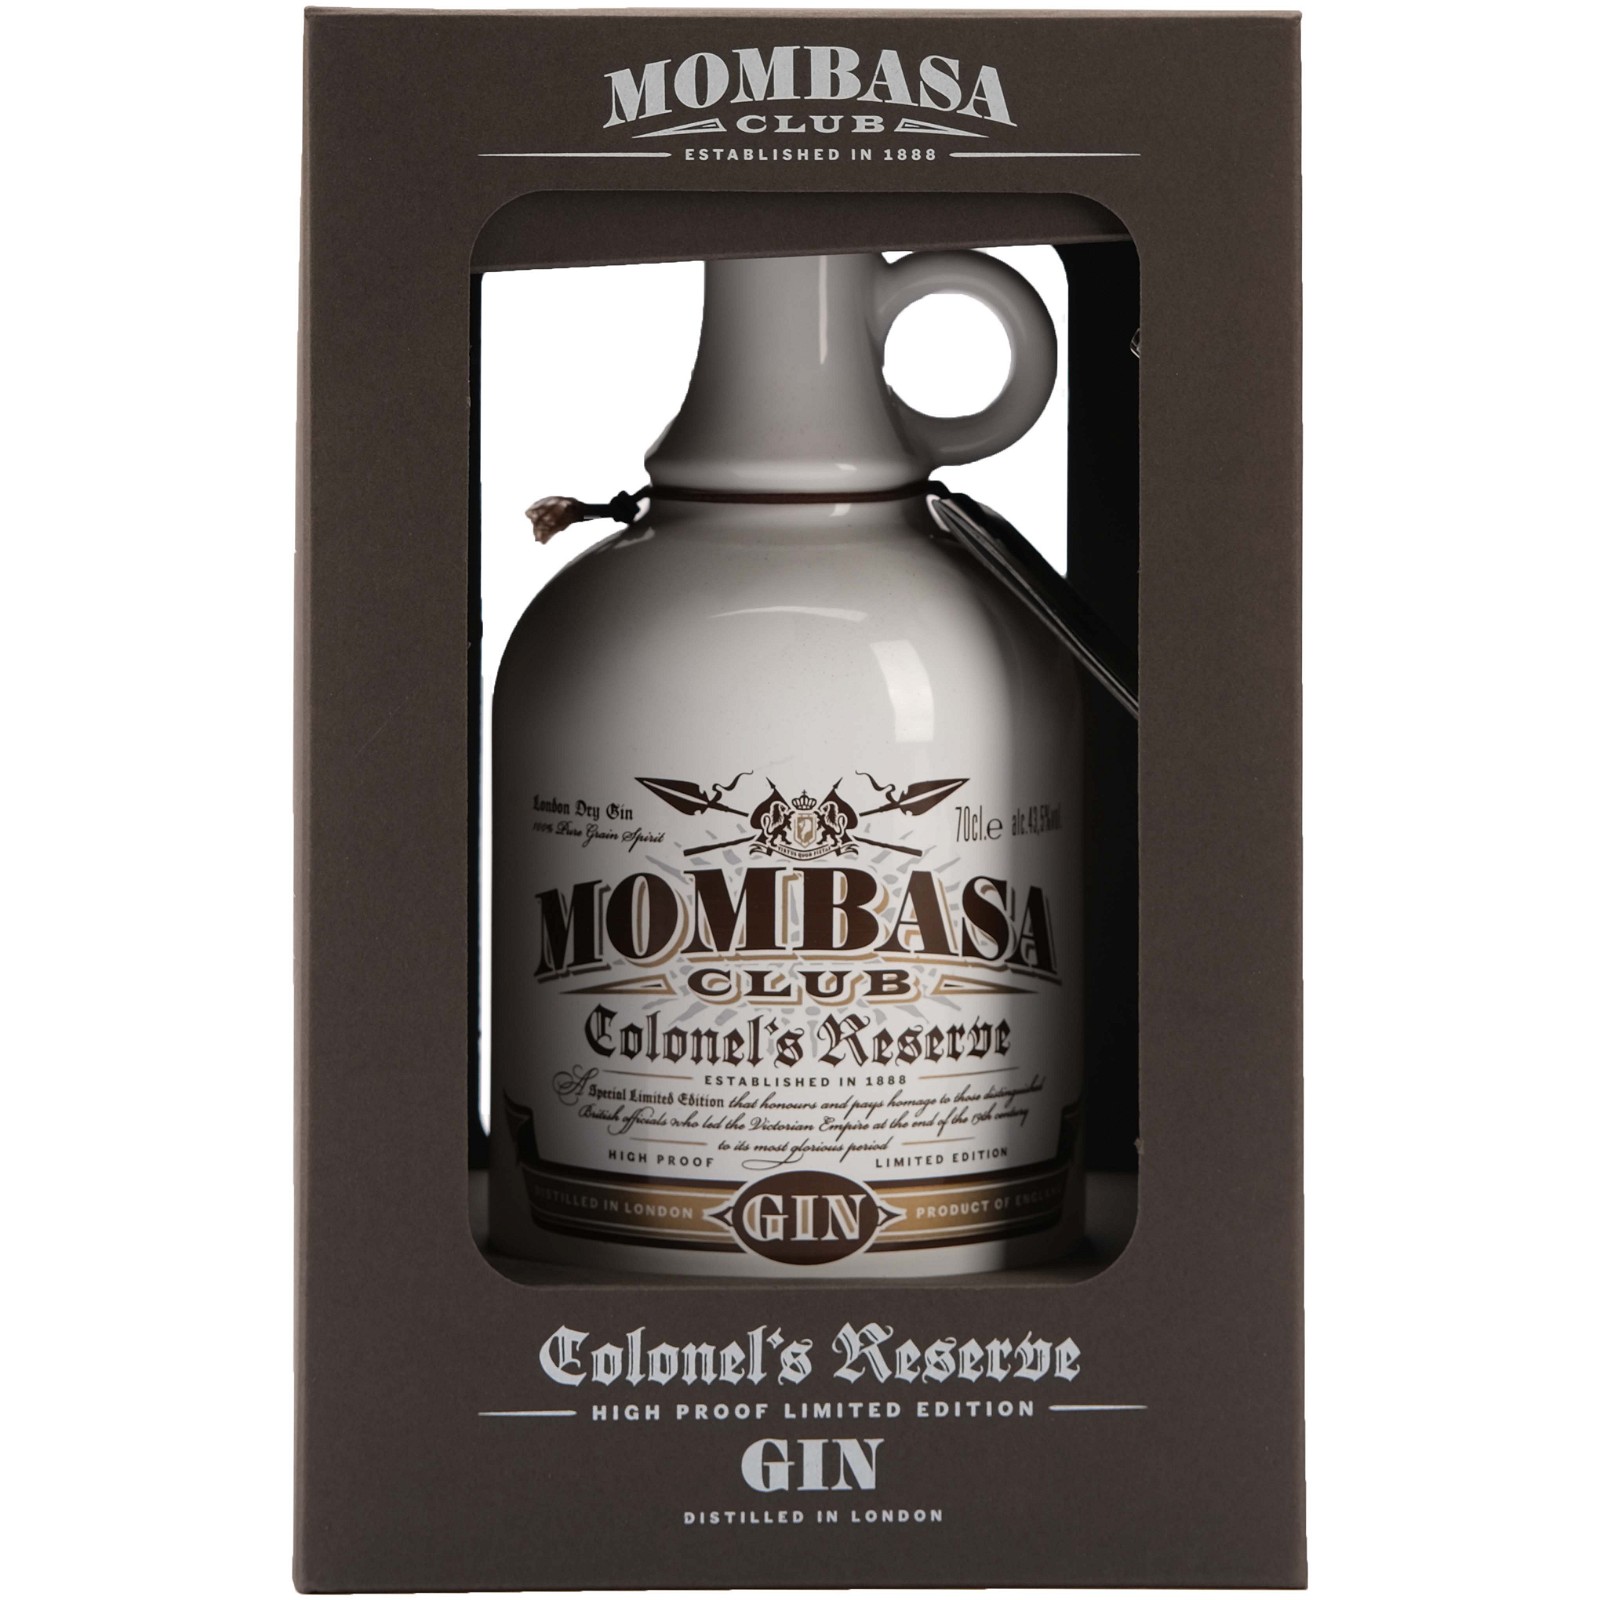 Mombasa Club Colonels Reserve gin